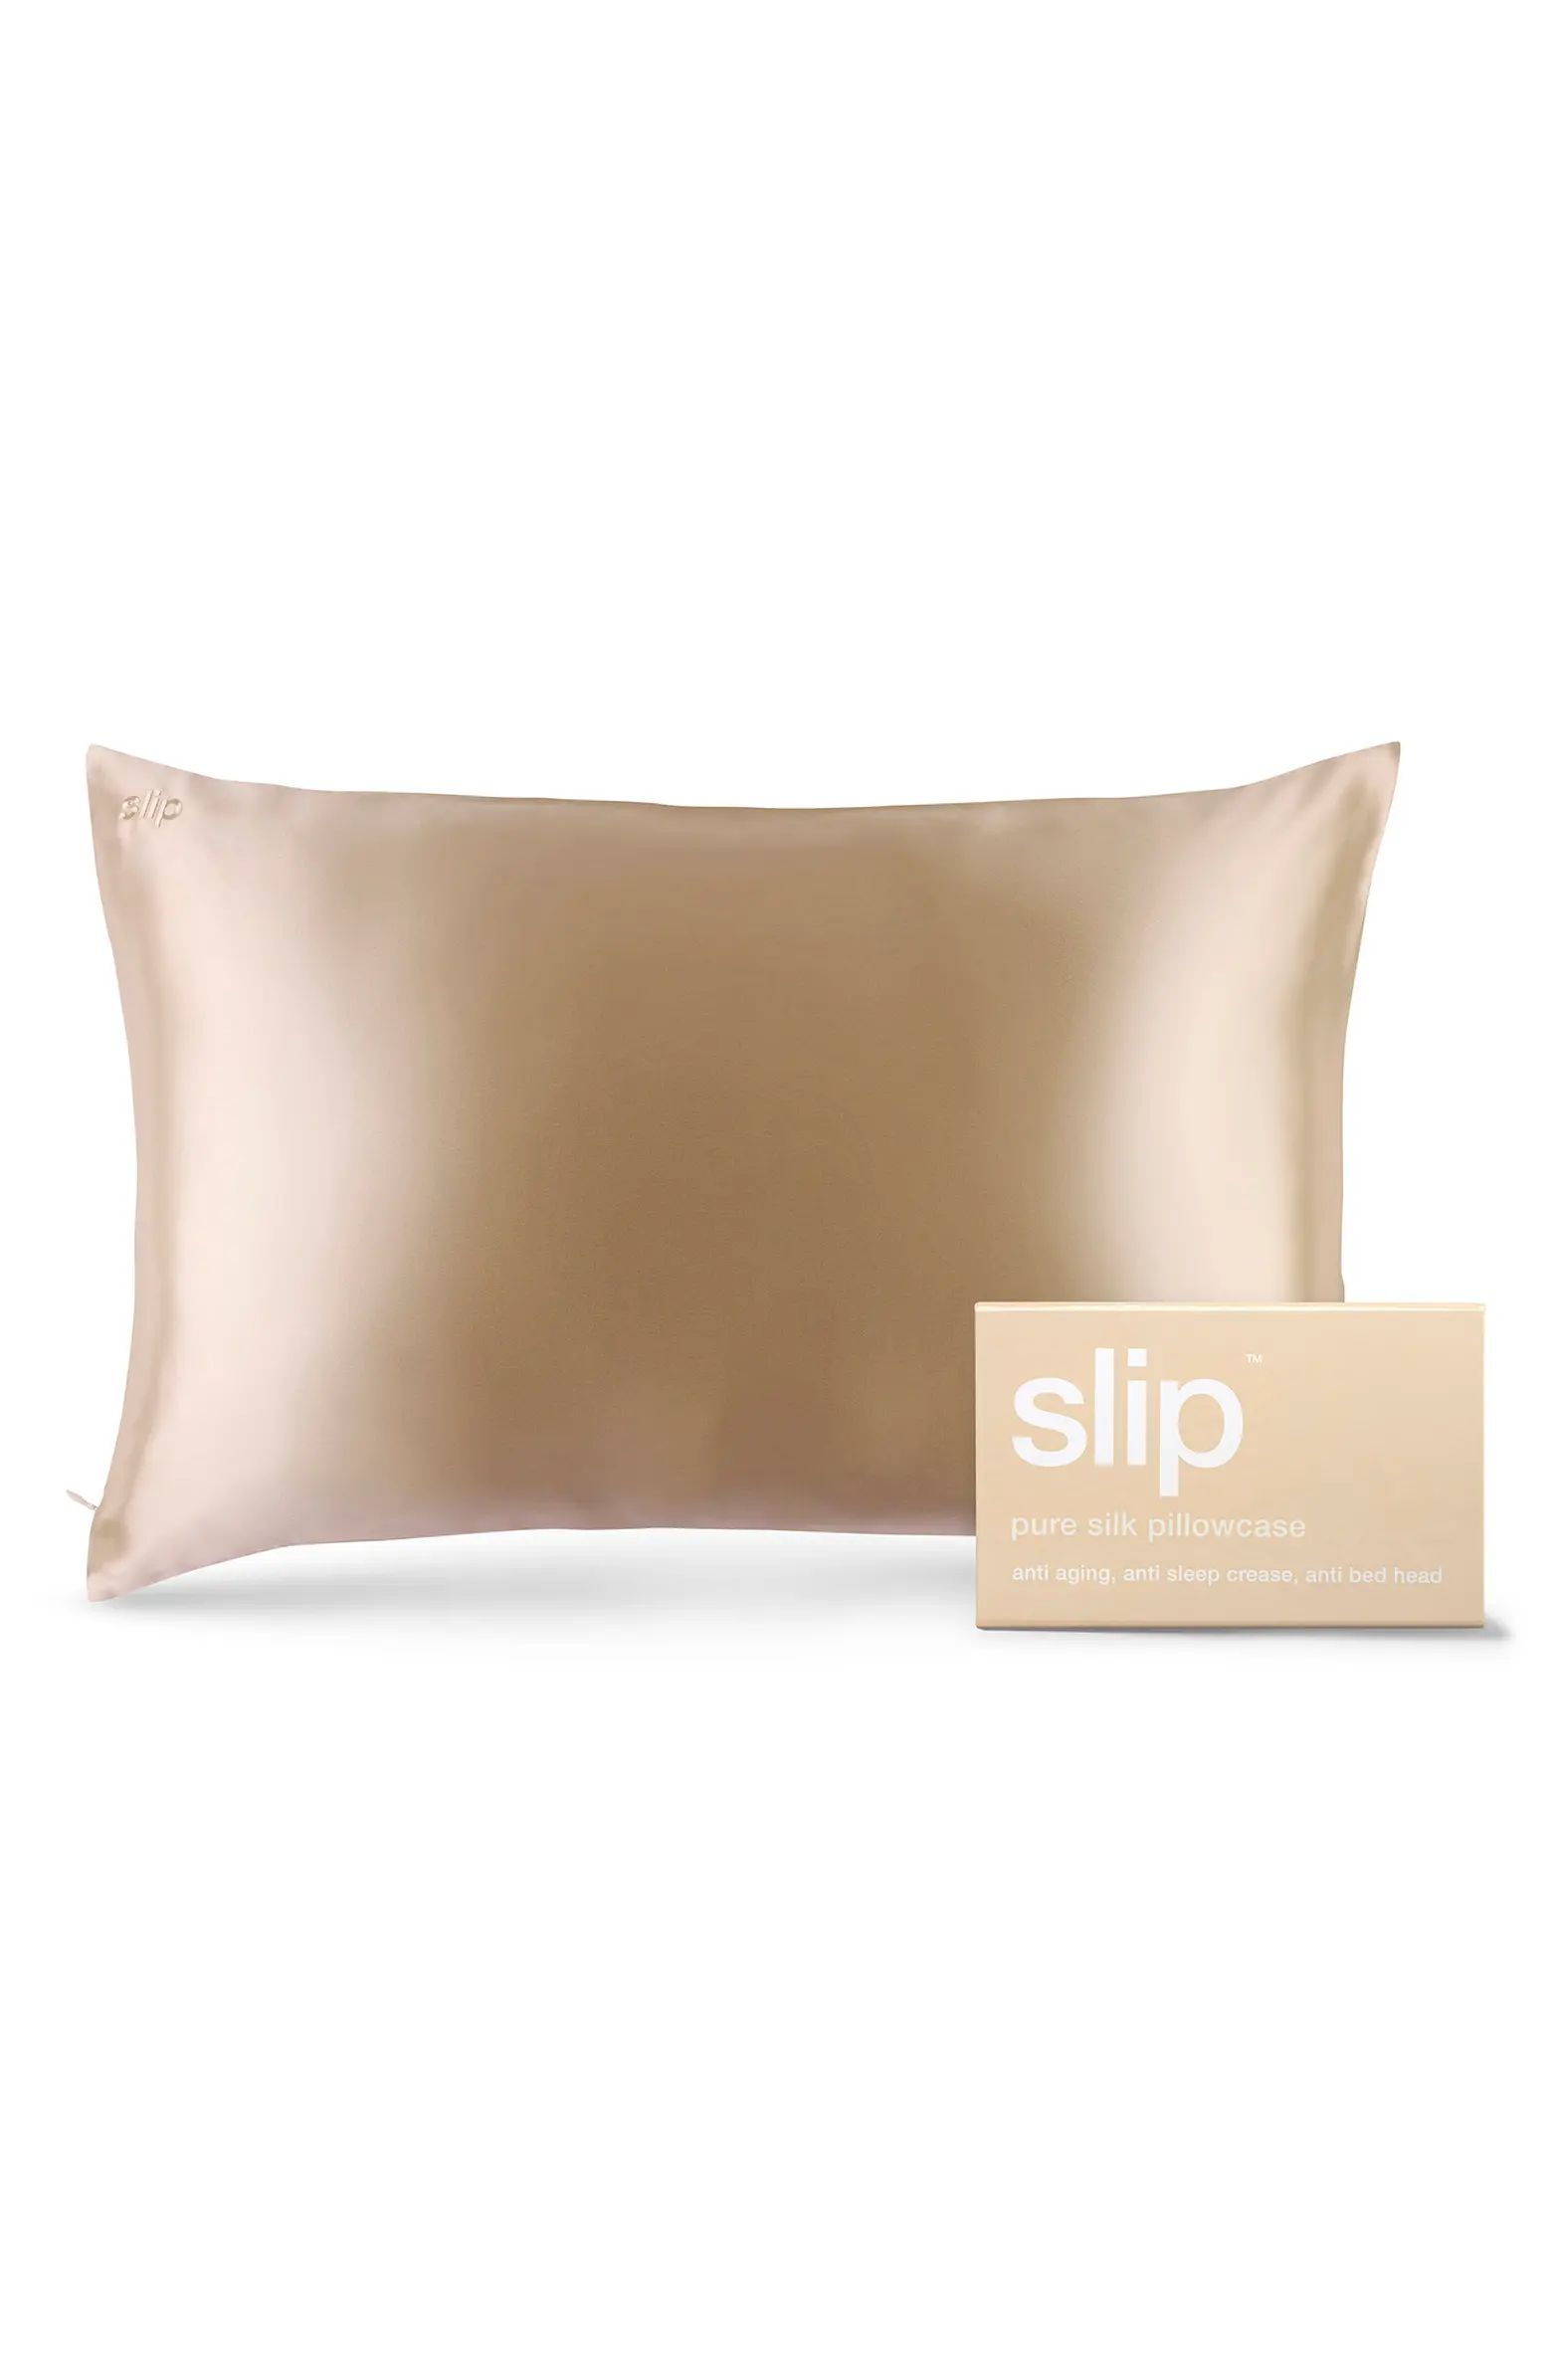 What it is: An anti-aging, anti-sleep crease, anti-bedhead pillowcase that's like an eight-hour b... | Nordstrom